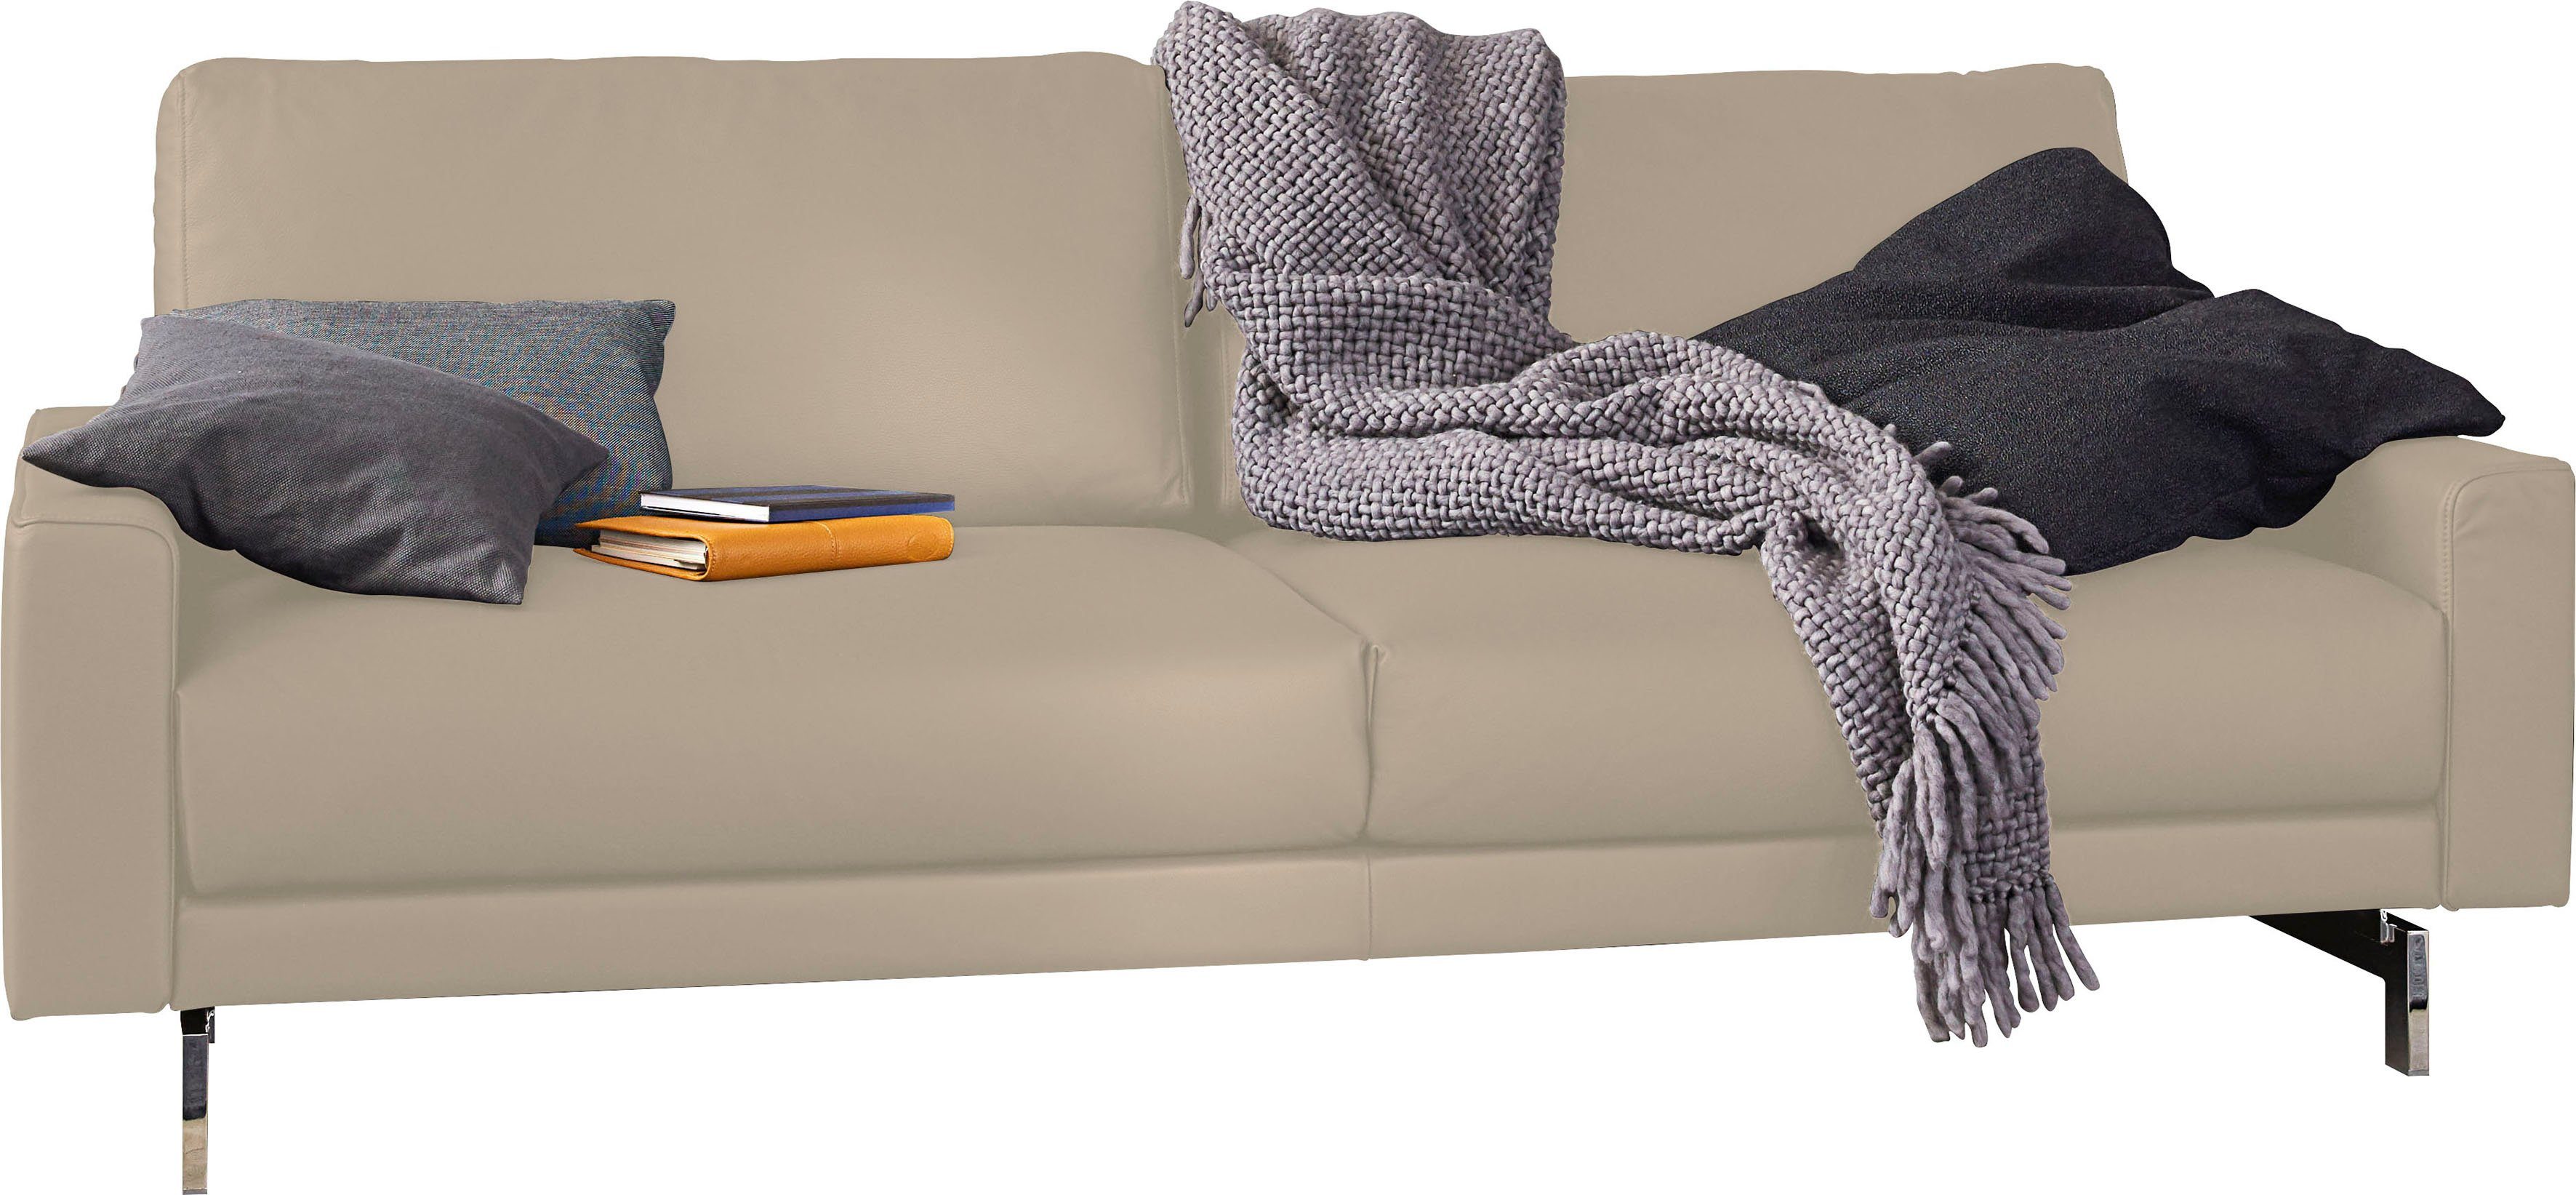 cm 204 Armlehne chromfarben hülsta 3-Sitzer glänzend, Breite sofa Fuß hs.450, niedrig,